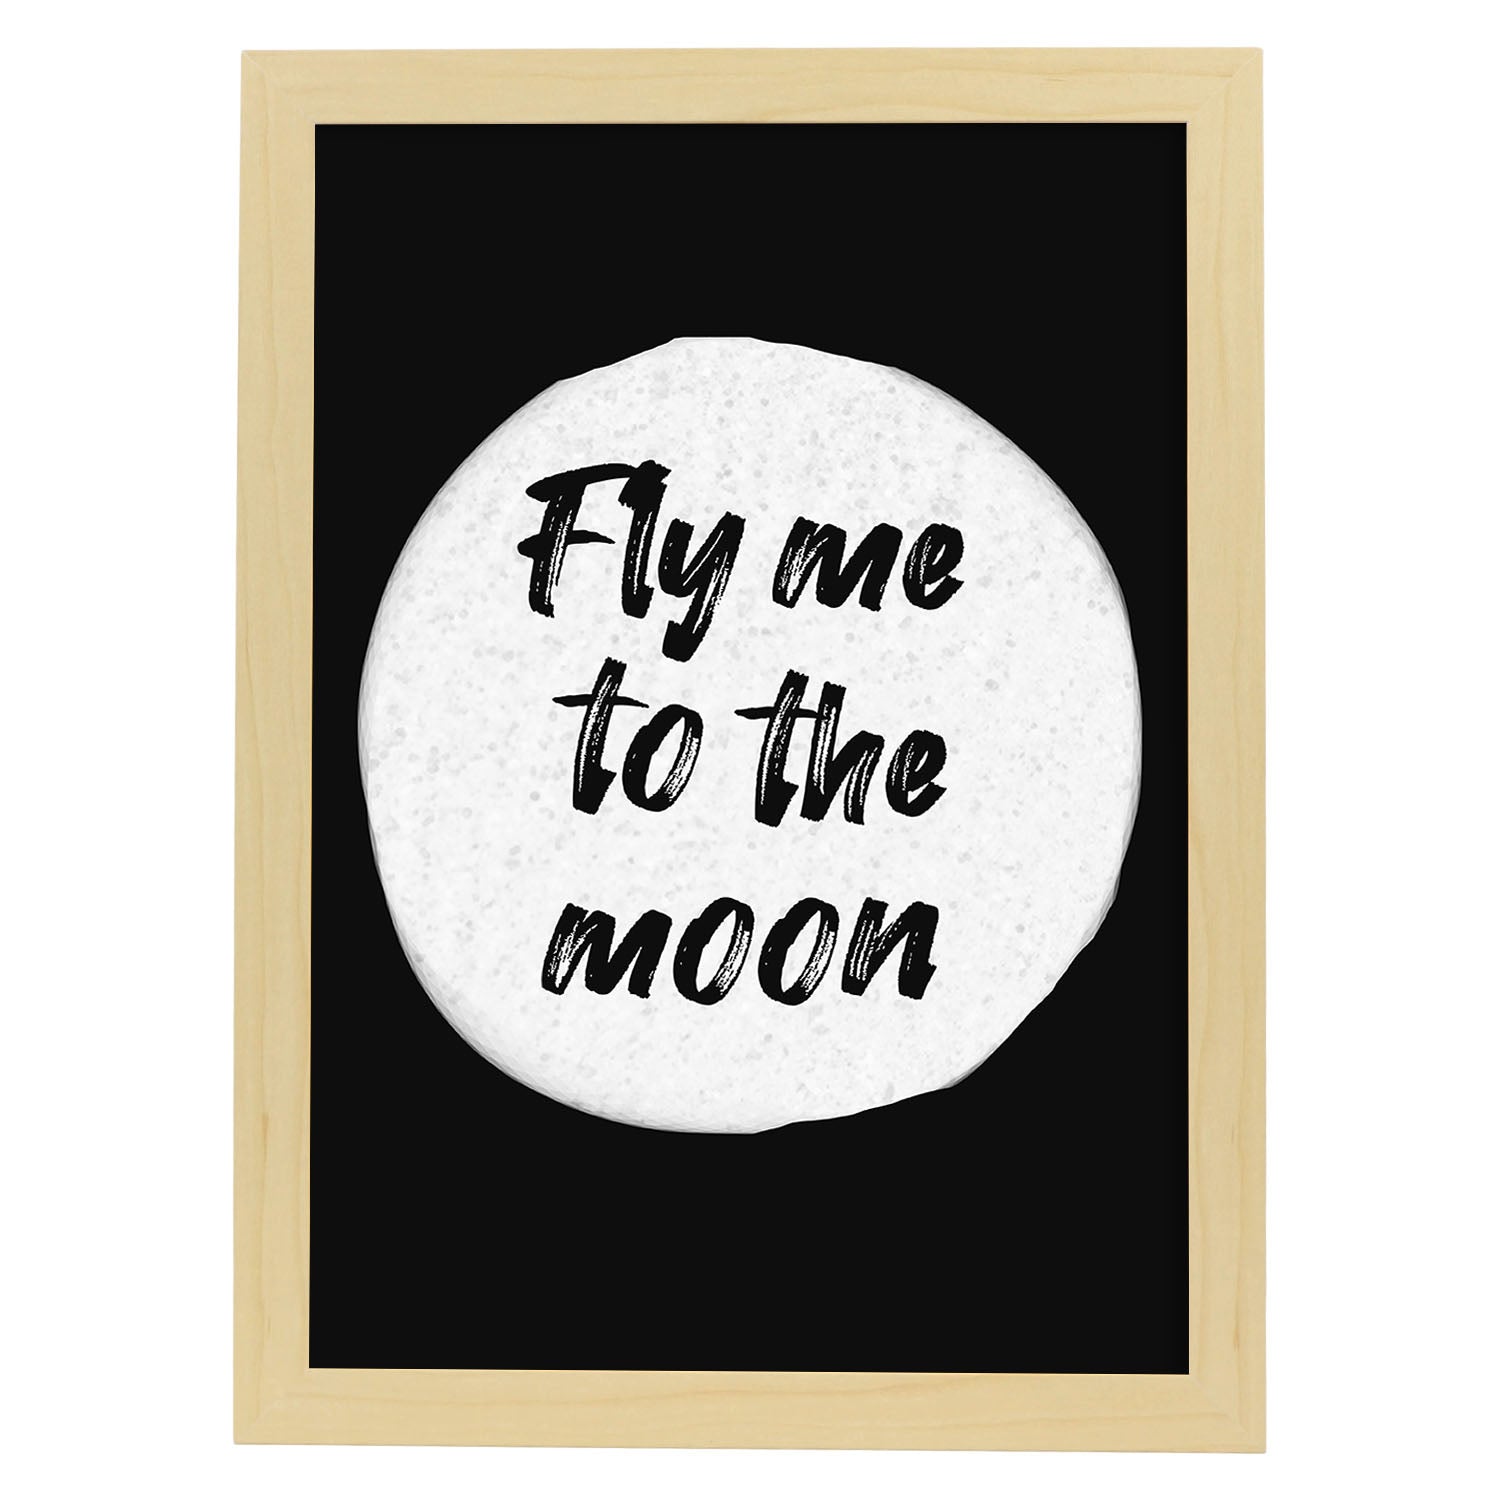 Lamina artistica decorativa con ilustración de fly me to the moon estilo Mensaje inspiracional-Artwork-Nacnic-A4-Marco Madera clara-Nacnic Estudio SL